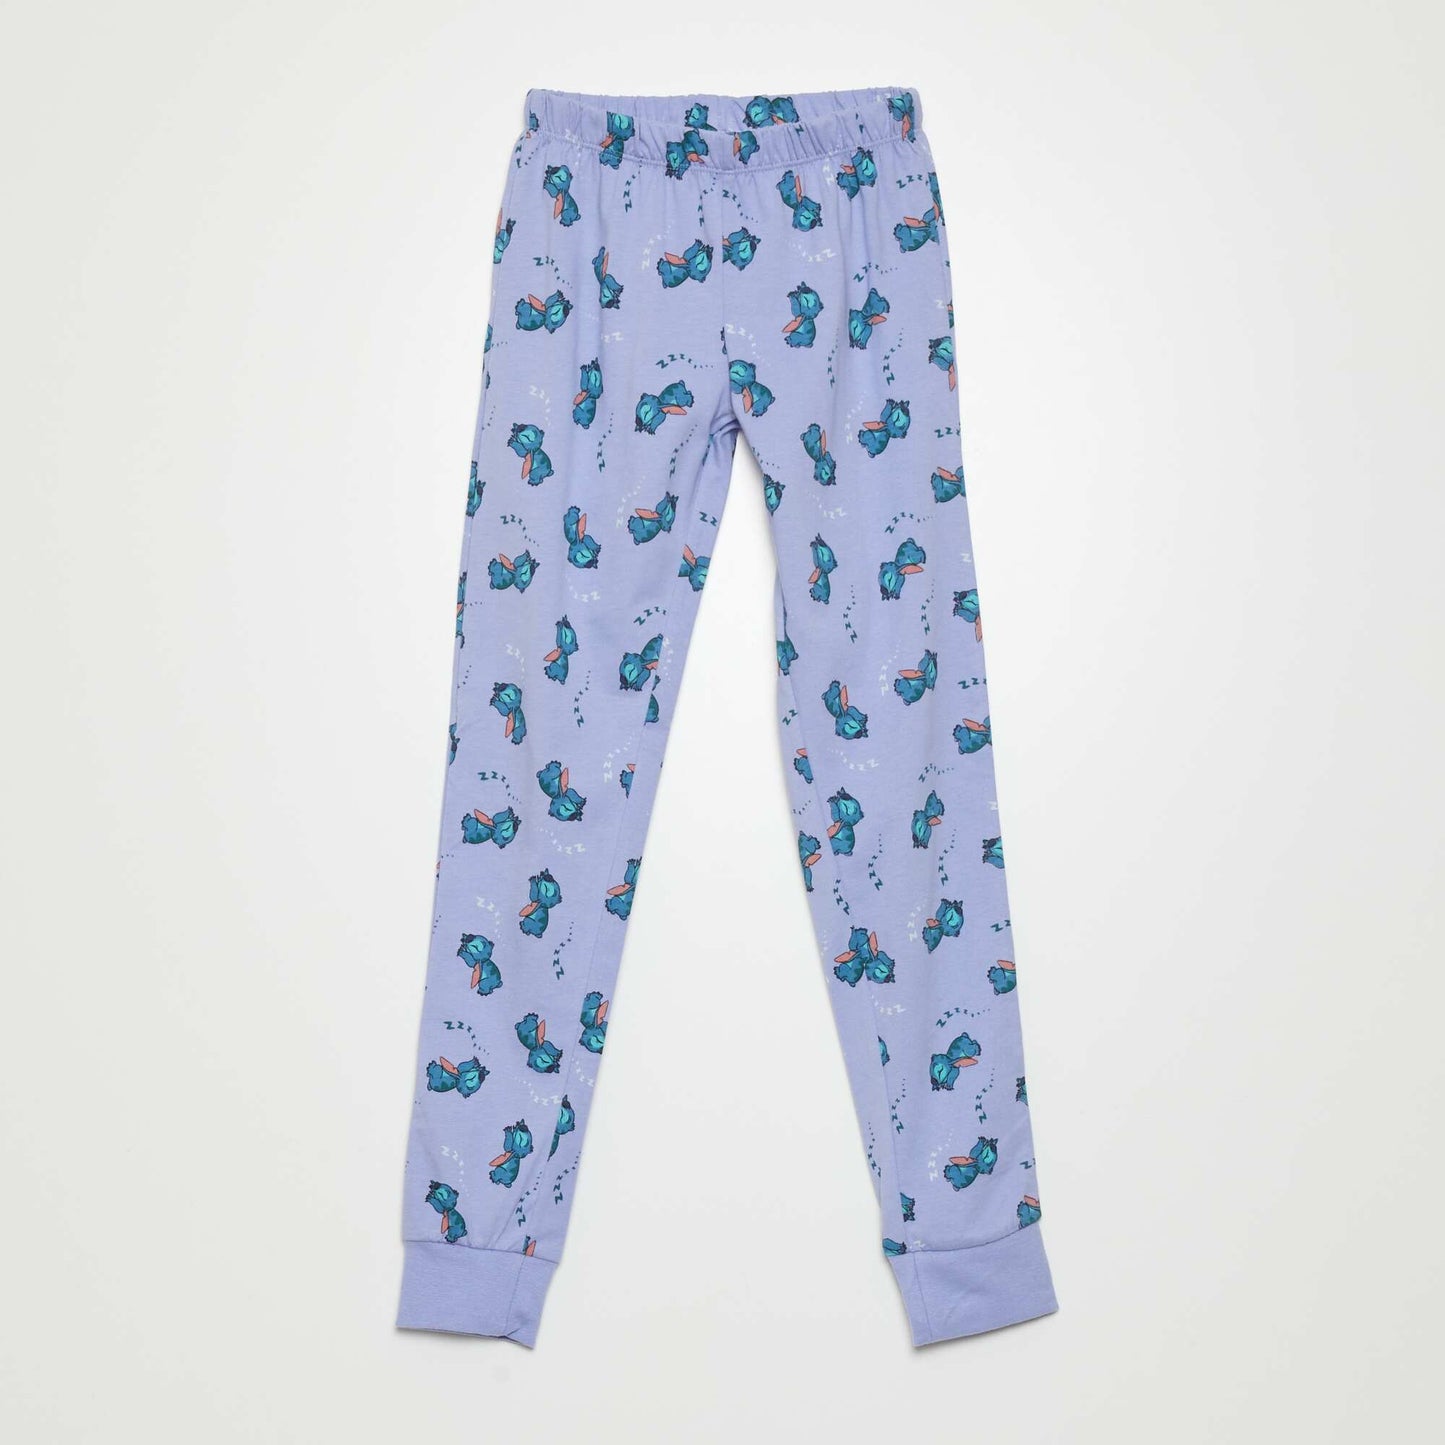 Pyjama long Disney en jersey - 2 pièces Bleu